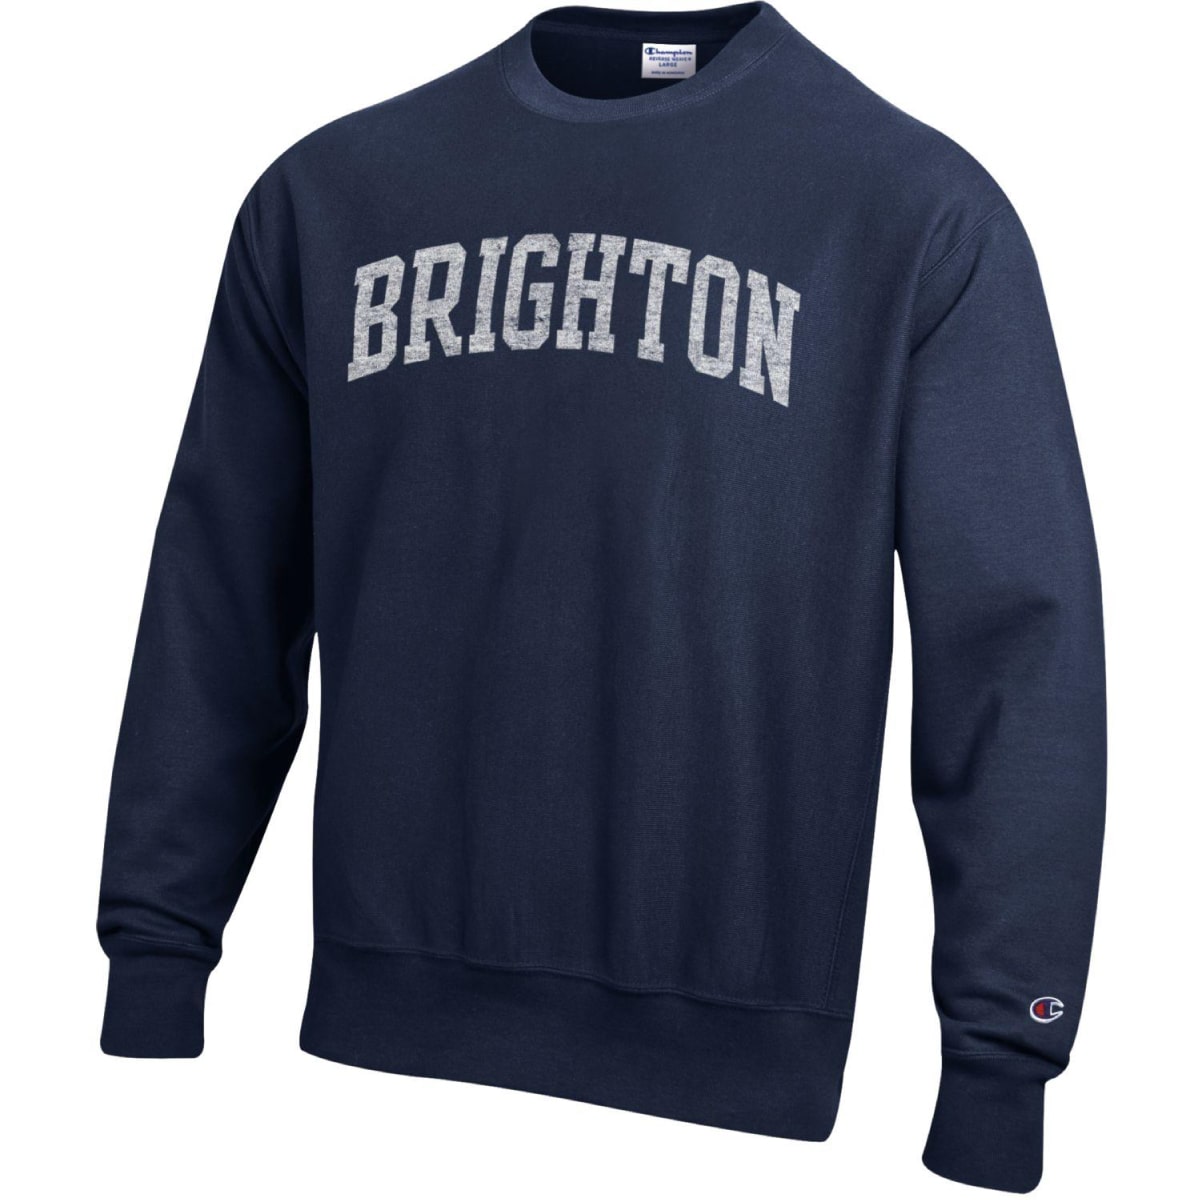 Brighton Under Armour Adult Reverse Weave Crew Sweatshirt X-SMALL